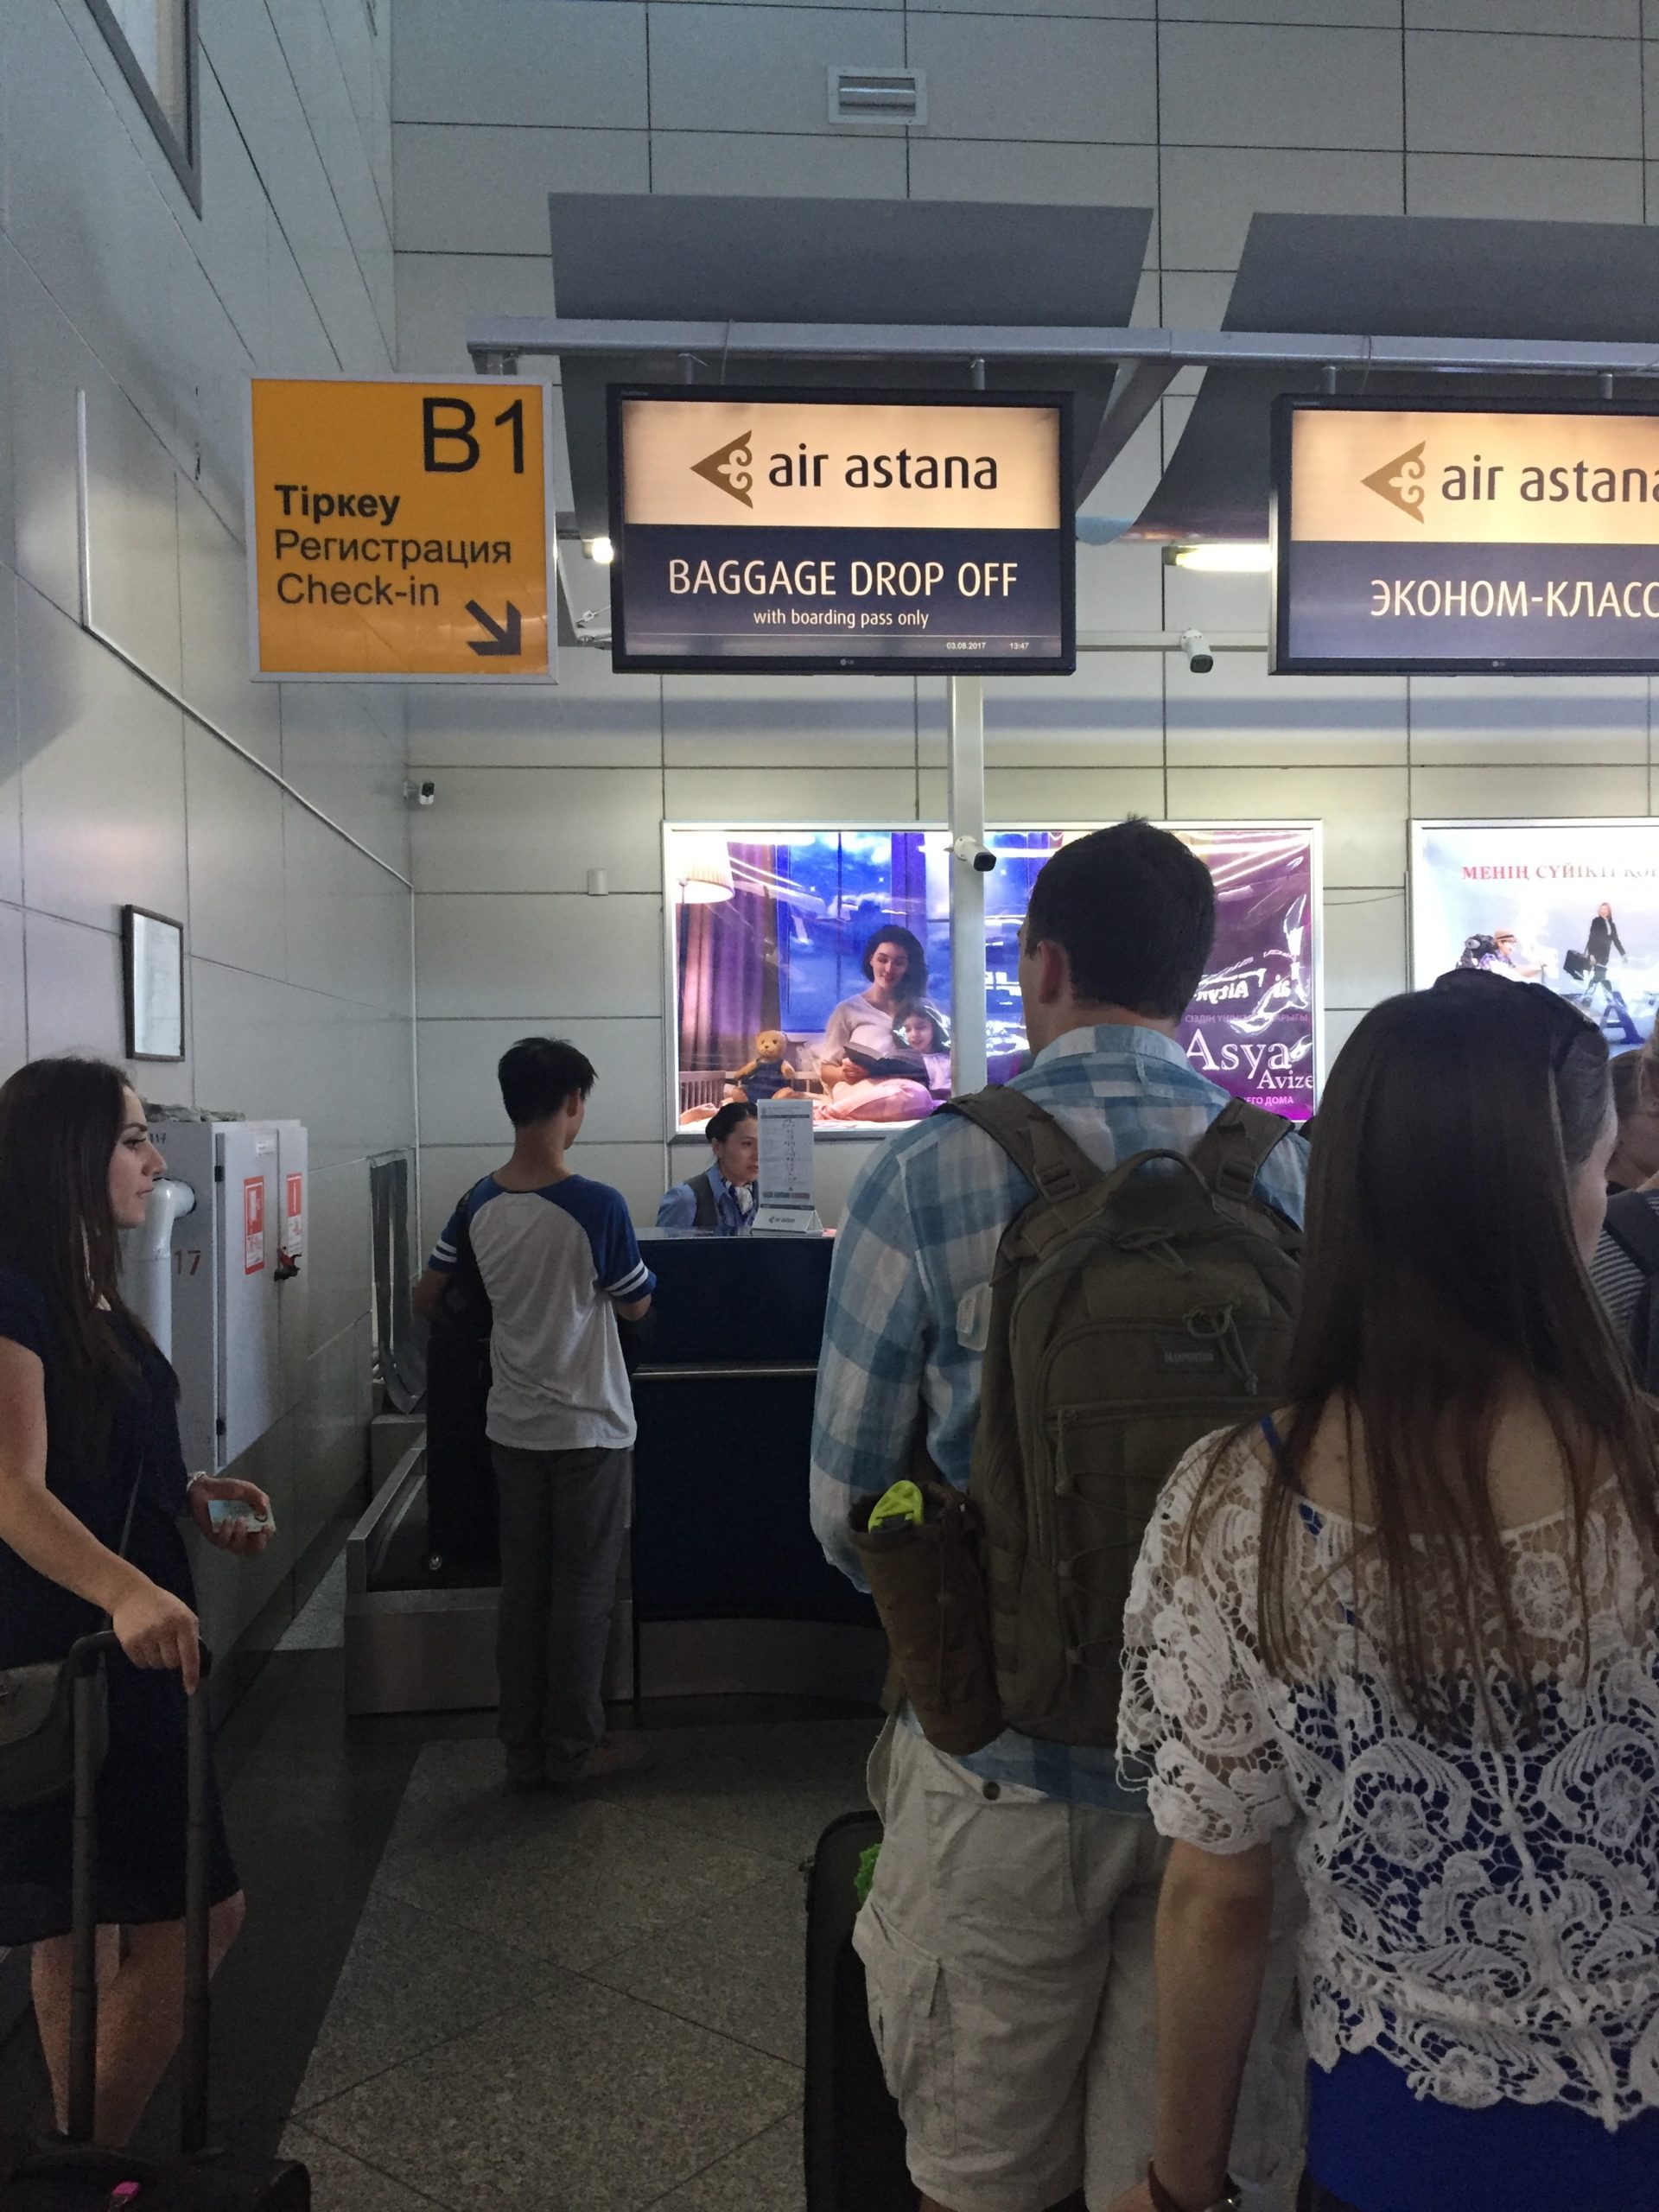 Flights - How to get around Kazakhstan